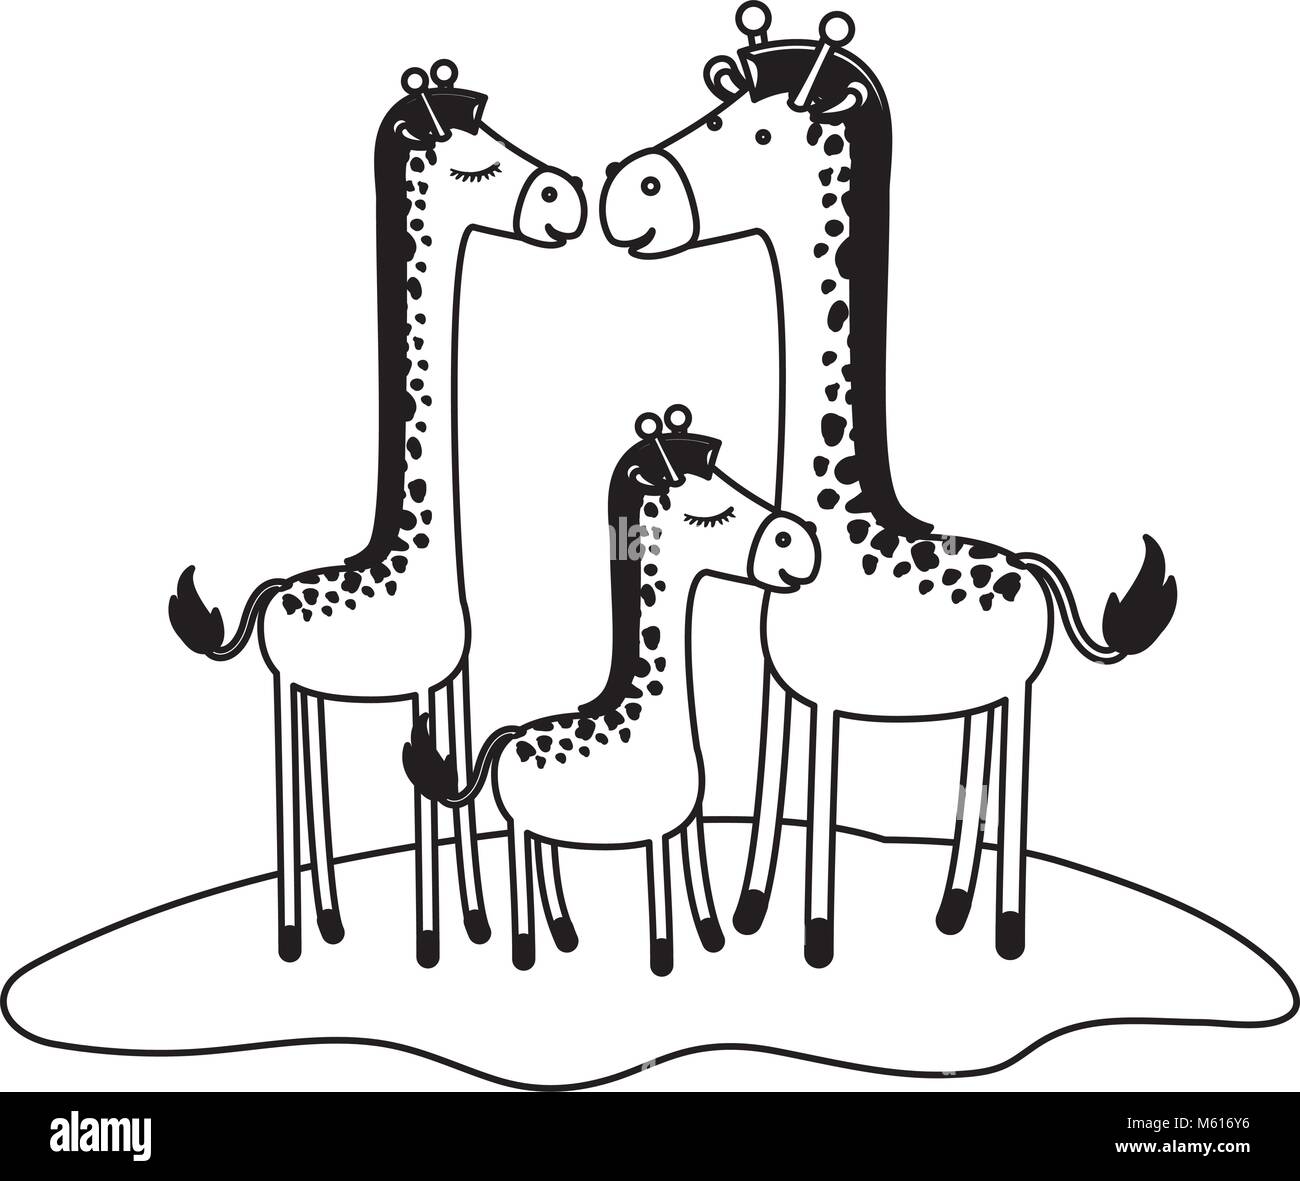 cartoon giraffes couple with calf over grass in black silhouette Stock Vector